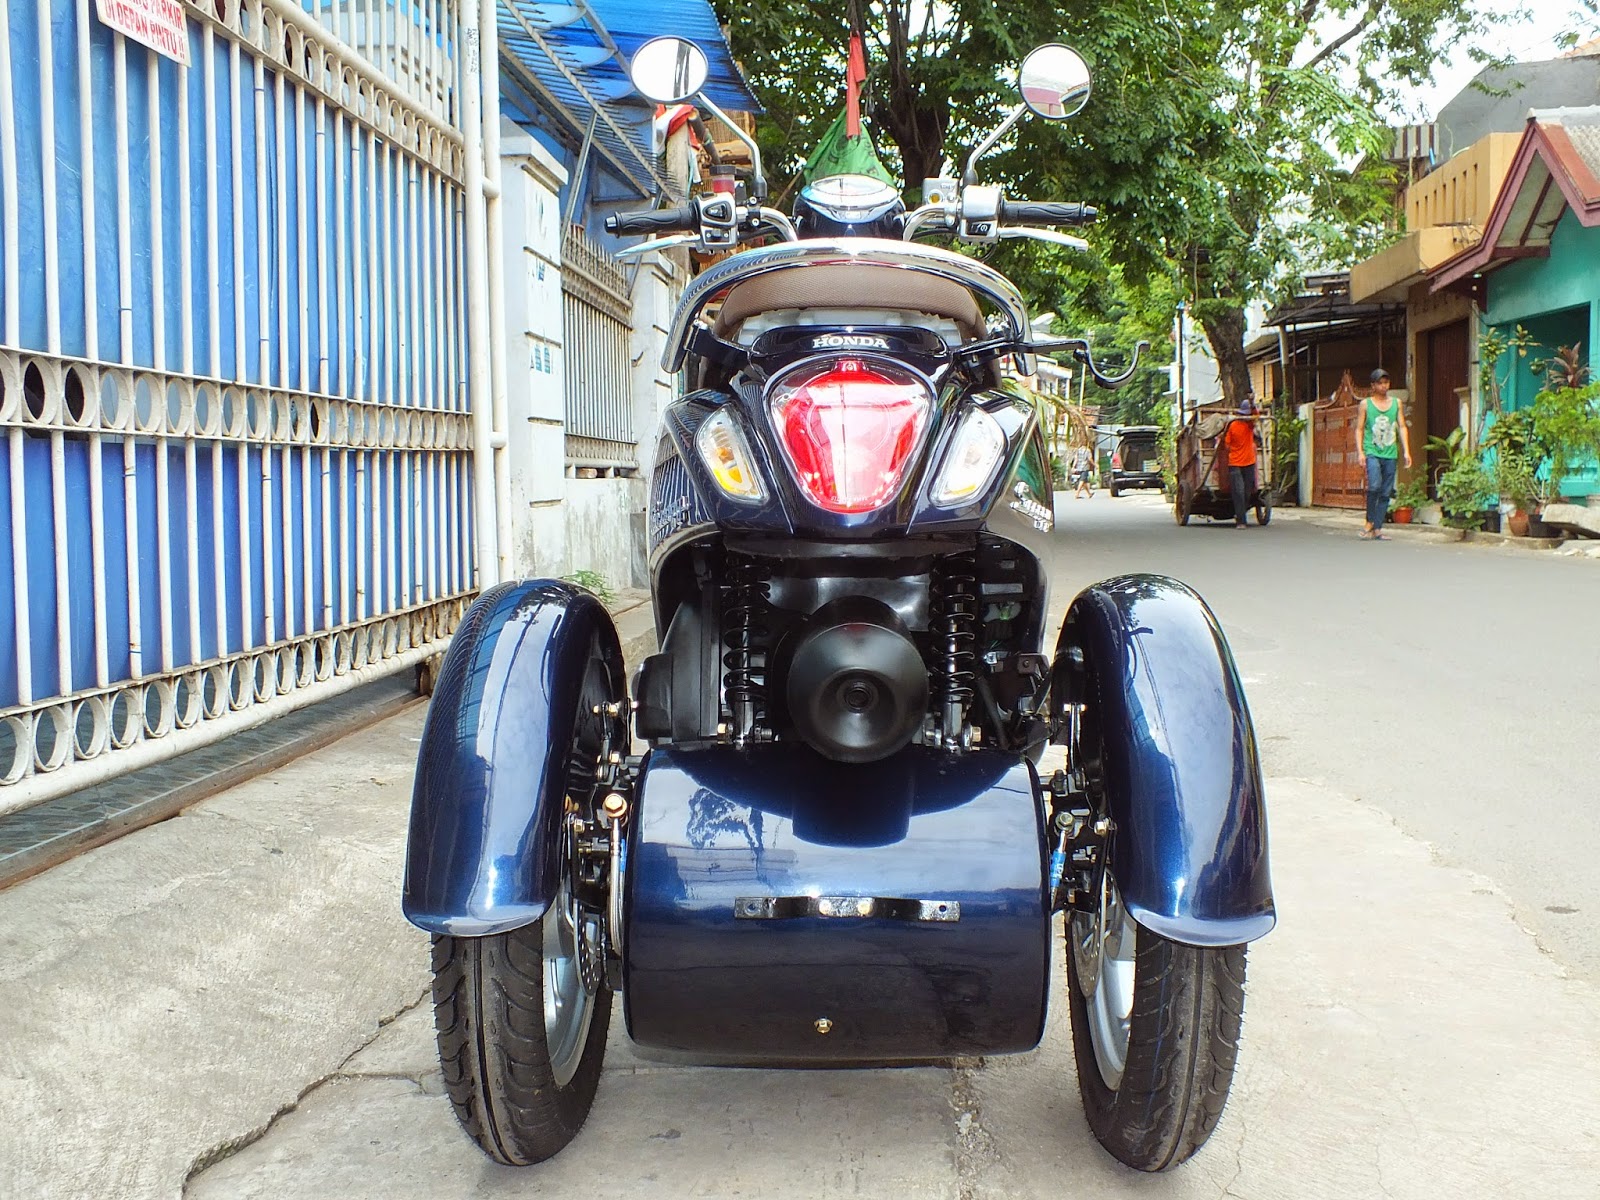 83 Bengkel Modifikasi Scoopy Jakarta Kumpulan Modifikasi Motor